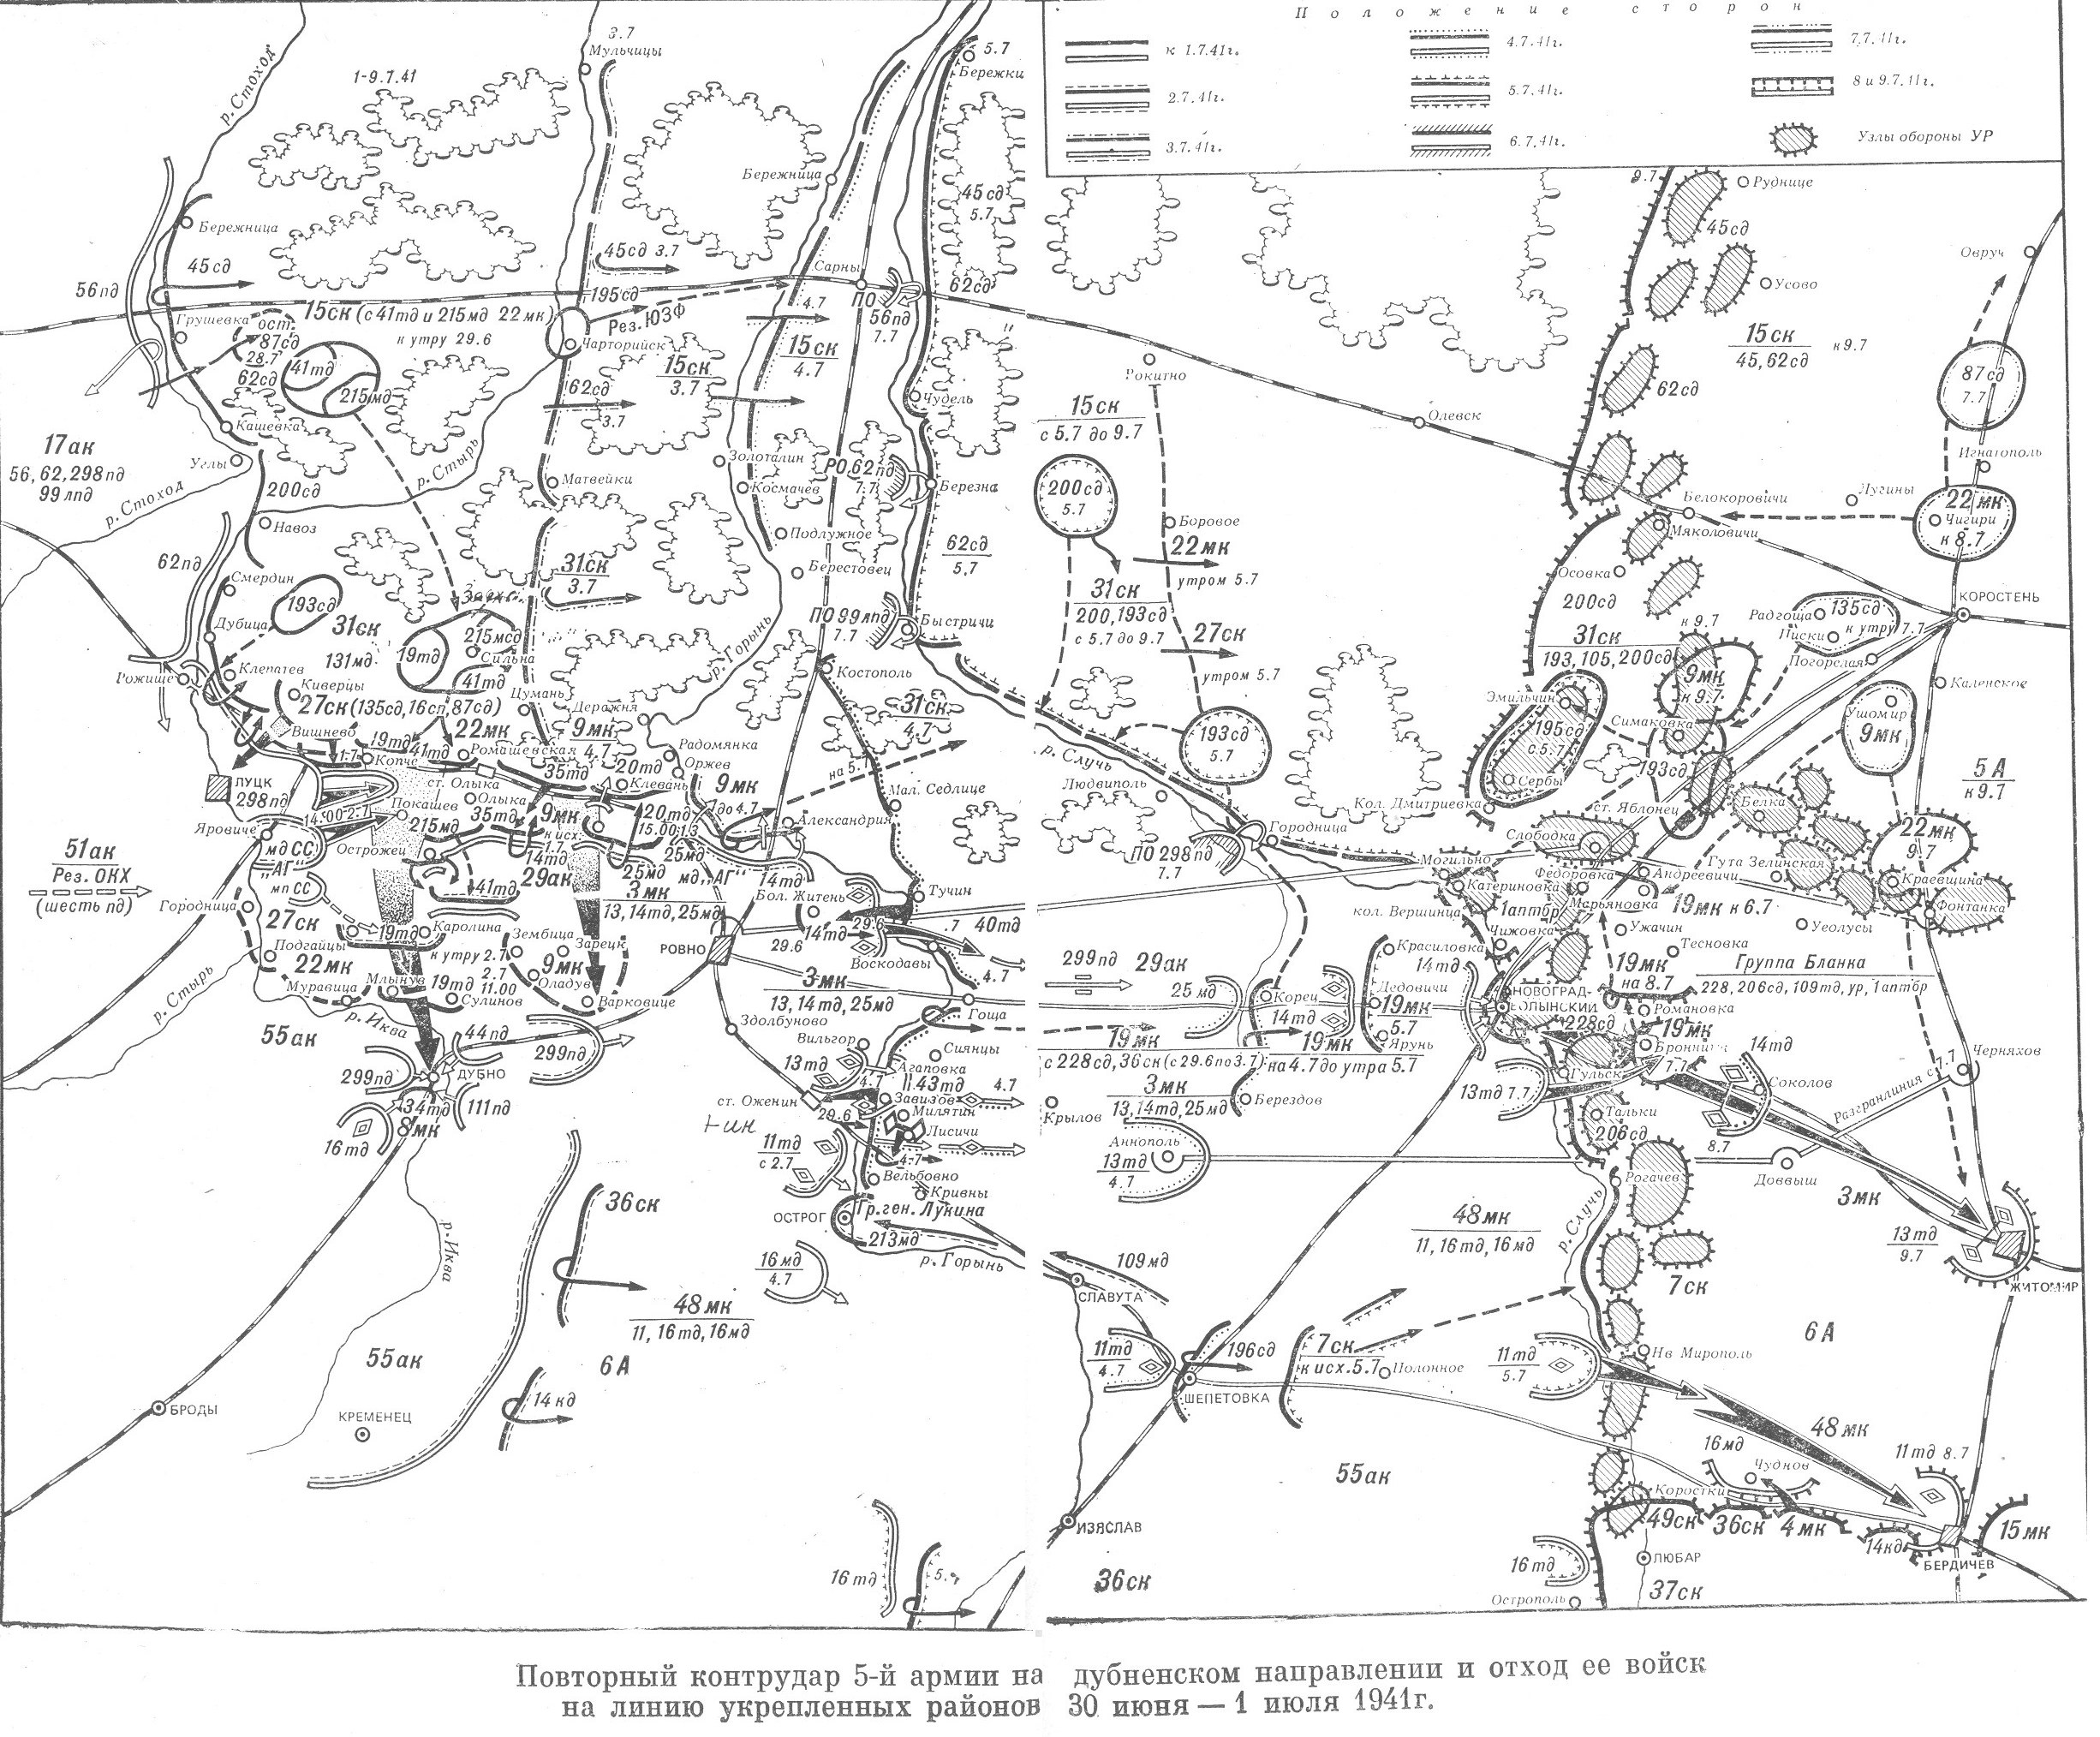 http://armchairgeneral.com/rkkaww2/maps/1941SW/Vladimirsky/5A_June30_July1_41.jpg